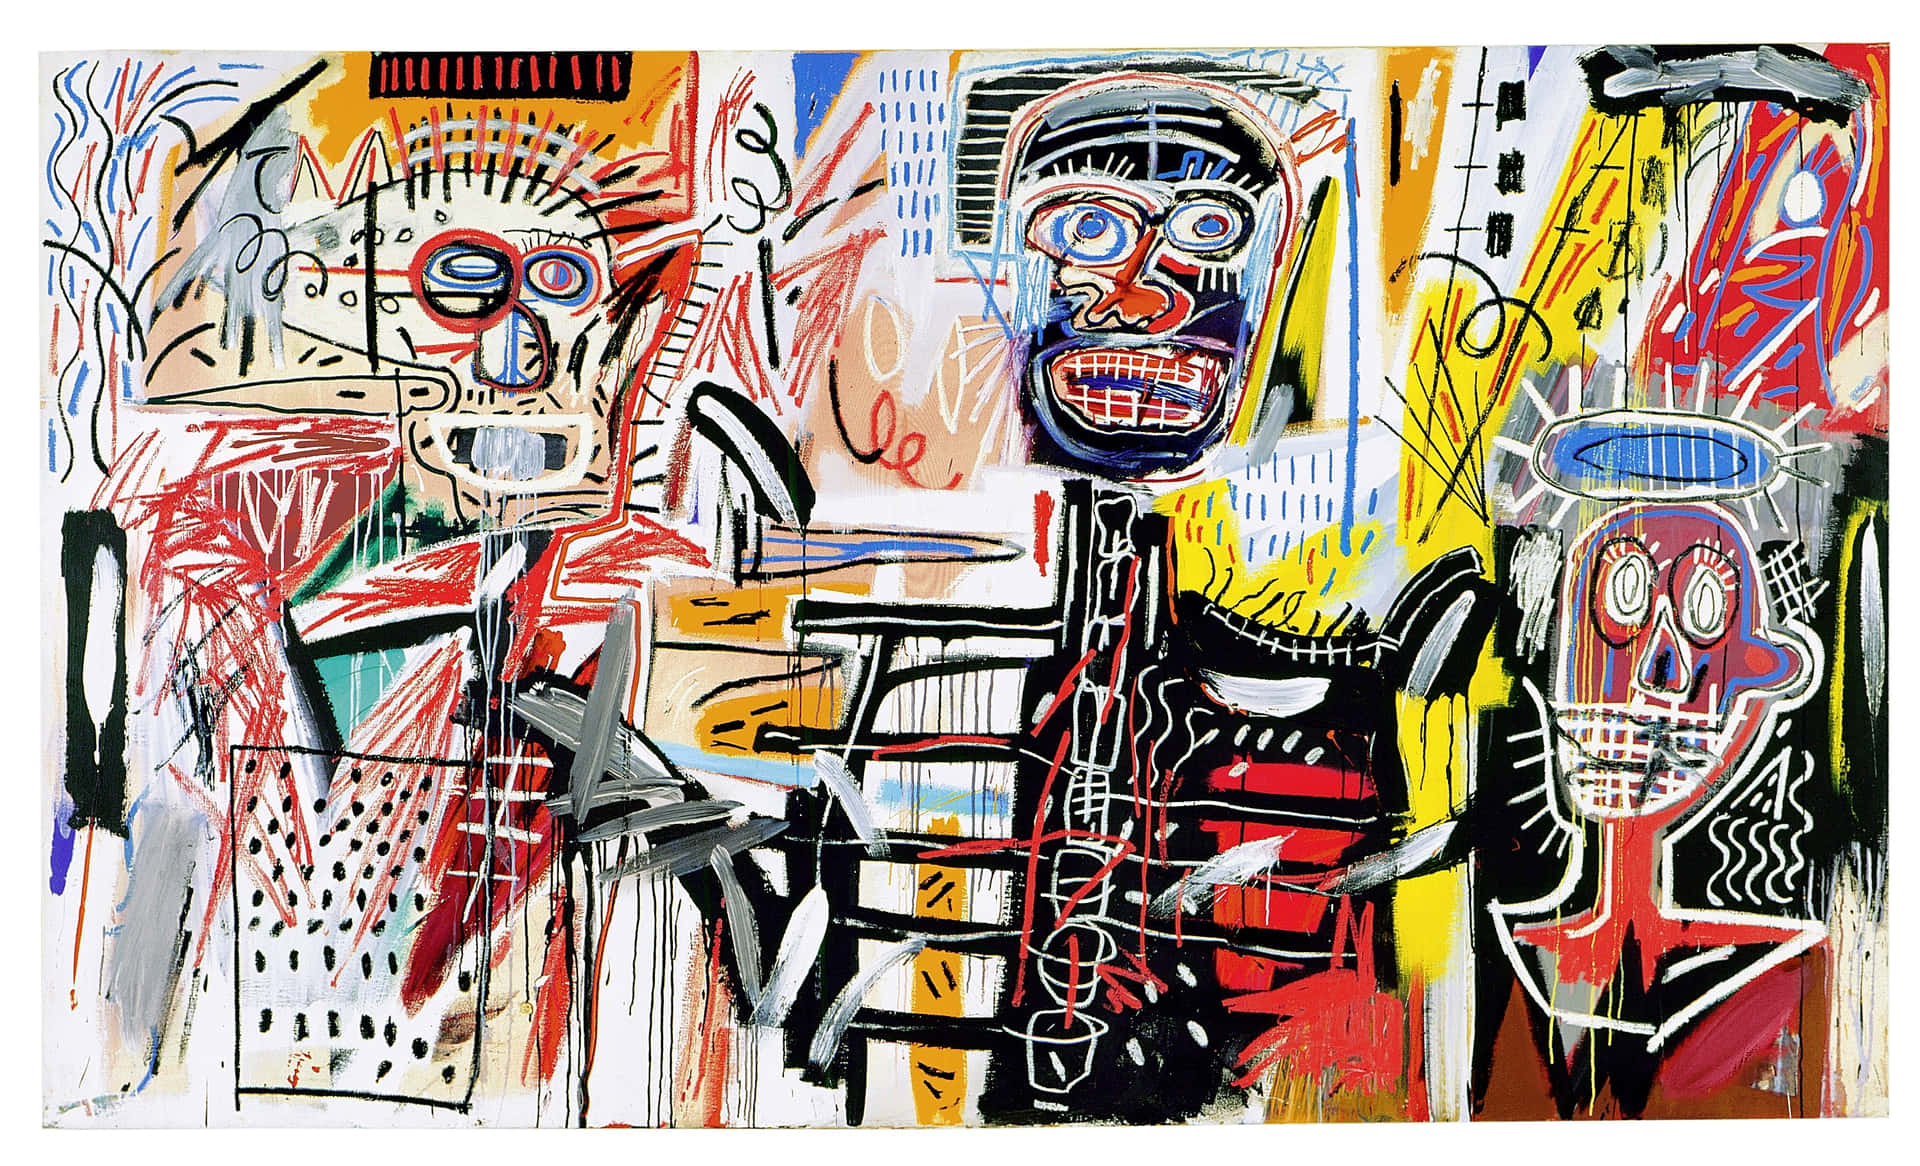 Jean-Michel Basquiat painting in a Brooklyn studio Wallpaper